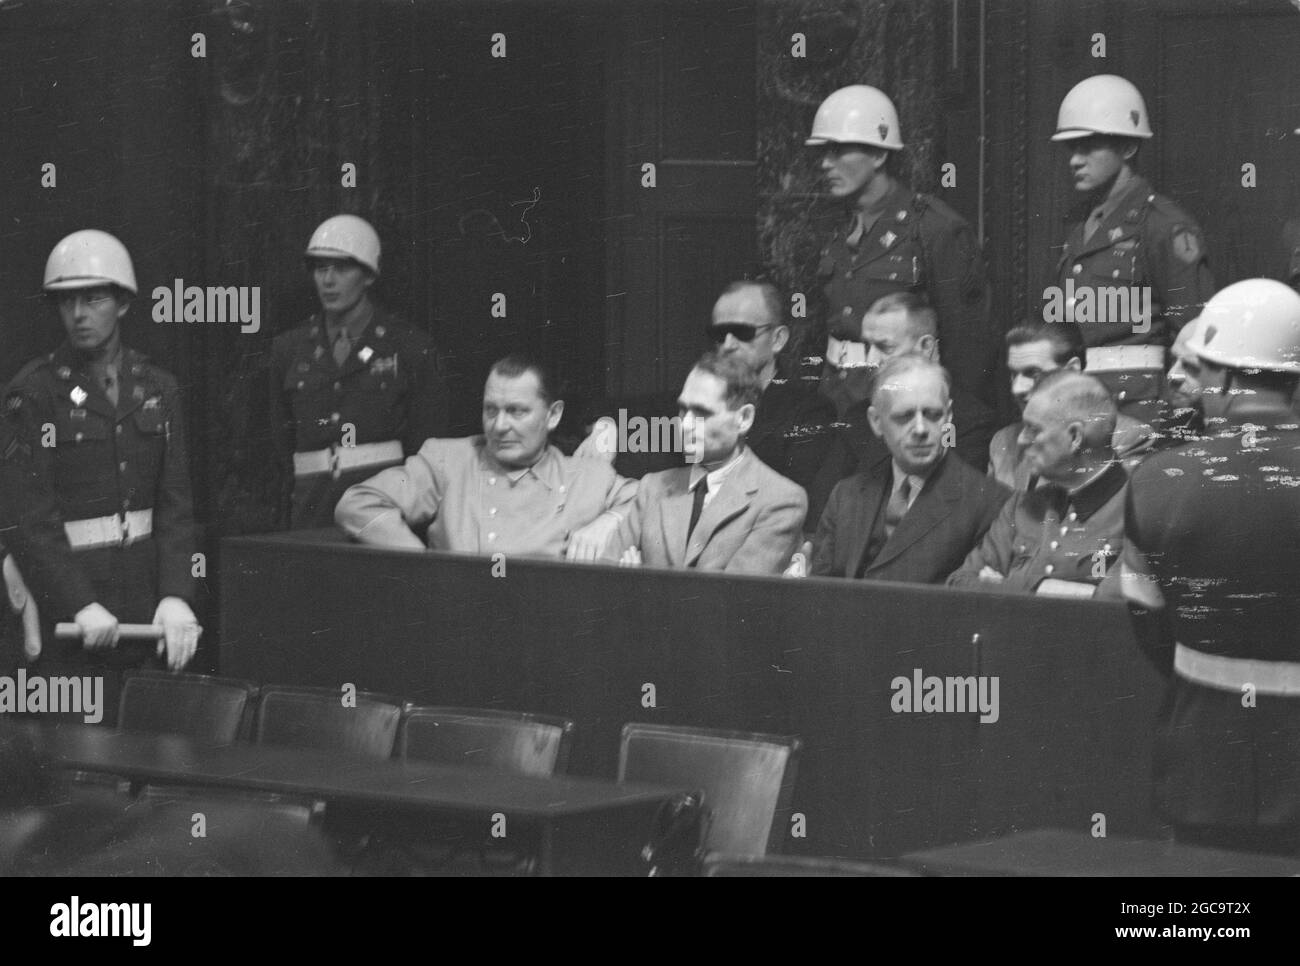 Leader nazisti al processo di Norimberga. Foreground (L-R) Göring, Hess, Ribbentrop e Keitel, back row Dönitz, Räder e Schirach Foto Stock